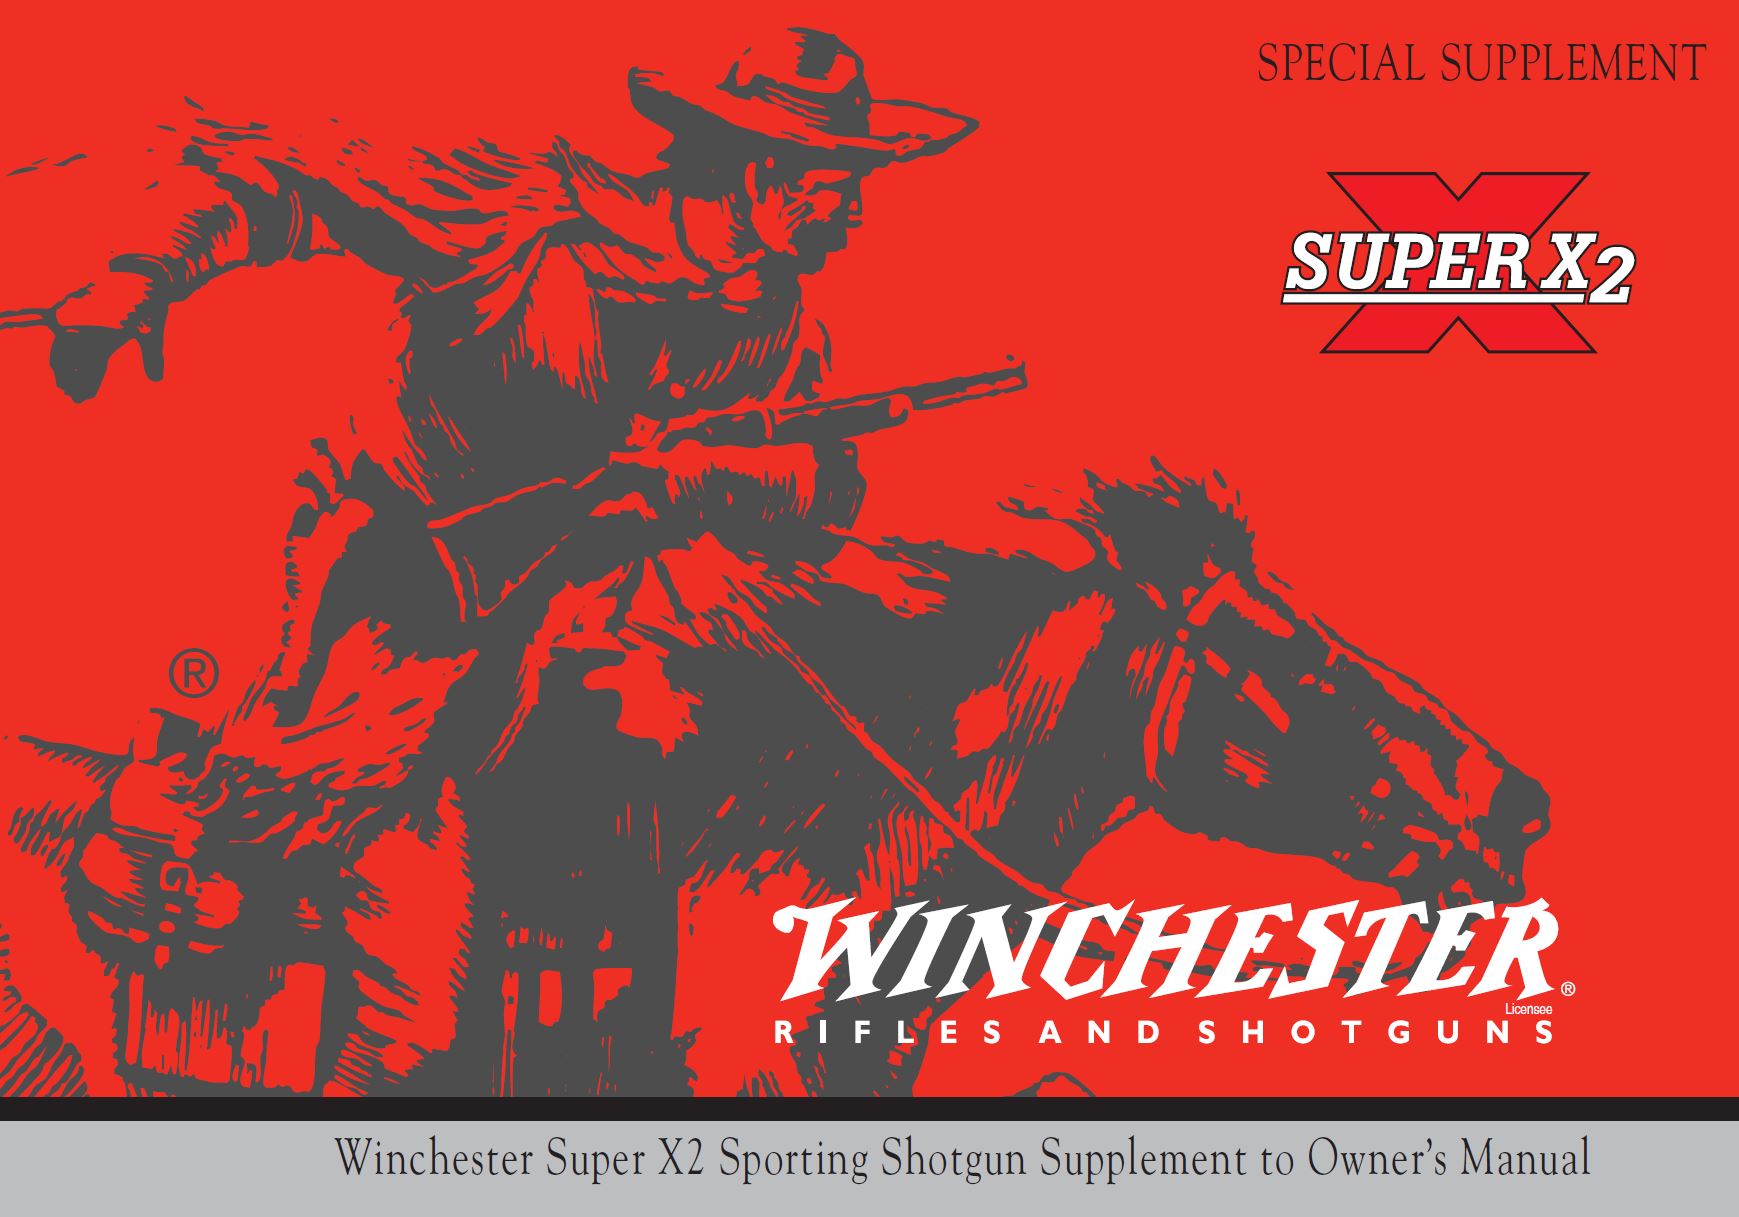 Super X2 Sporting Supplement Shotgun Owner's Manual Cover